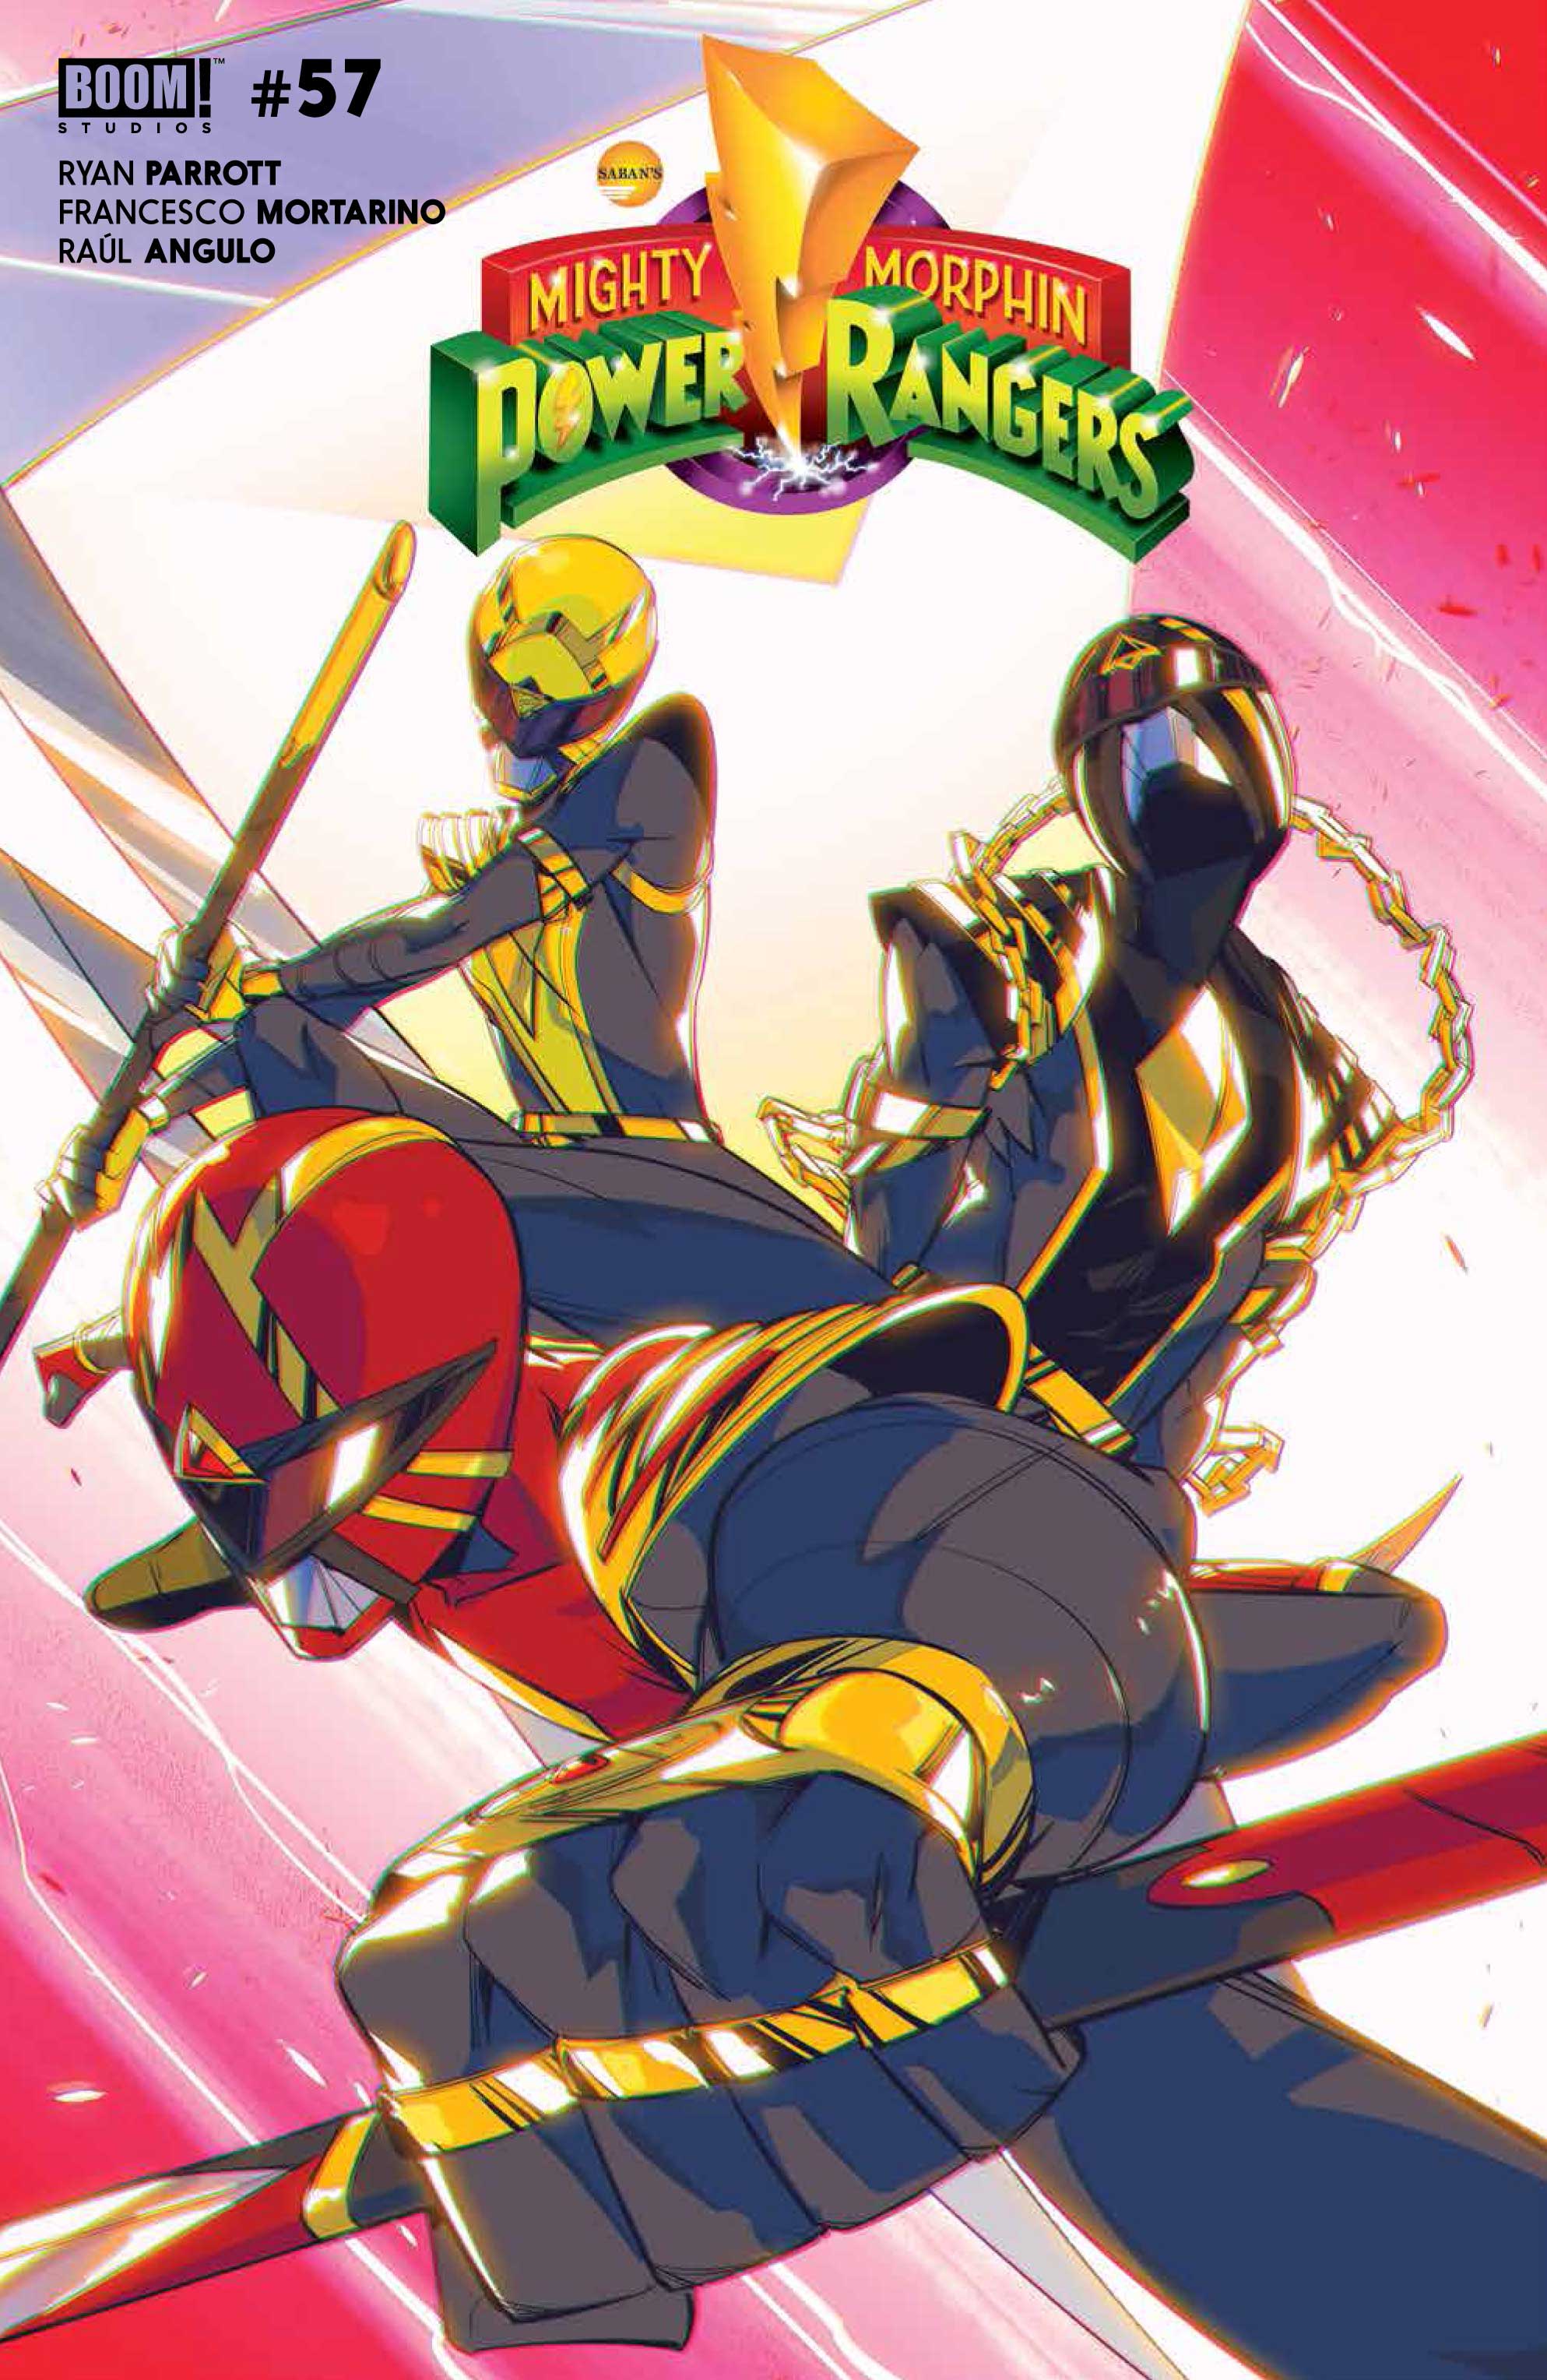 Power Rangers #1 Cover B Nicuolo